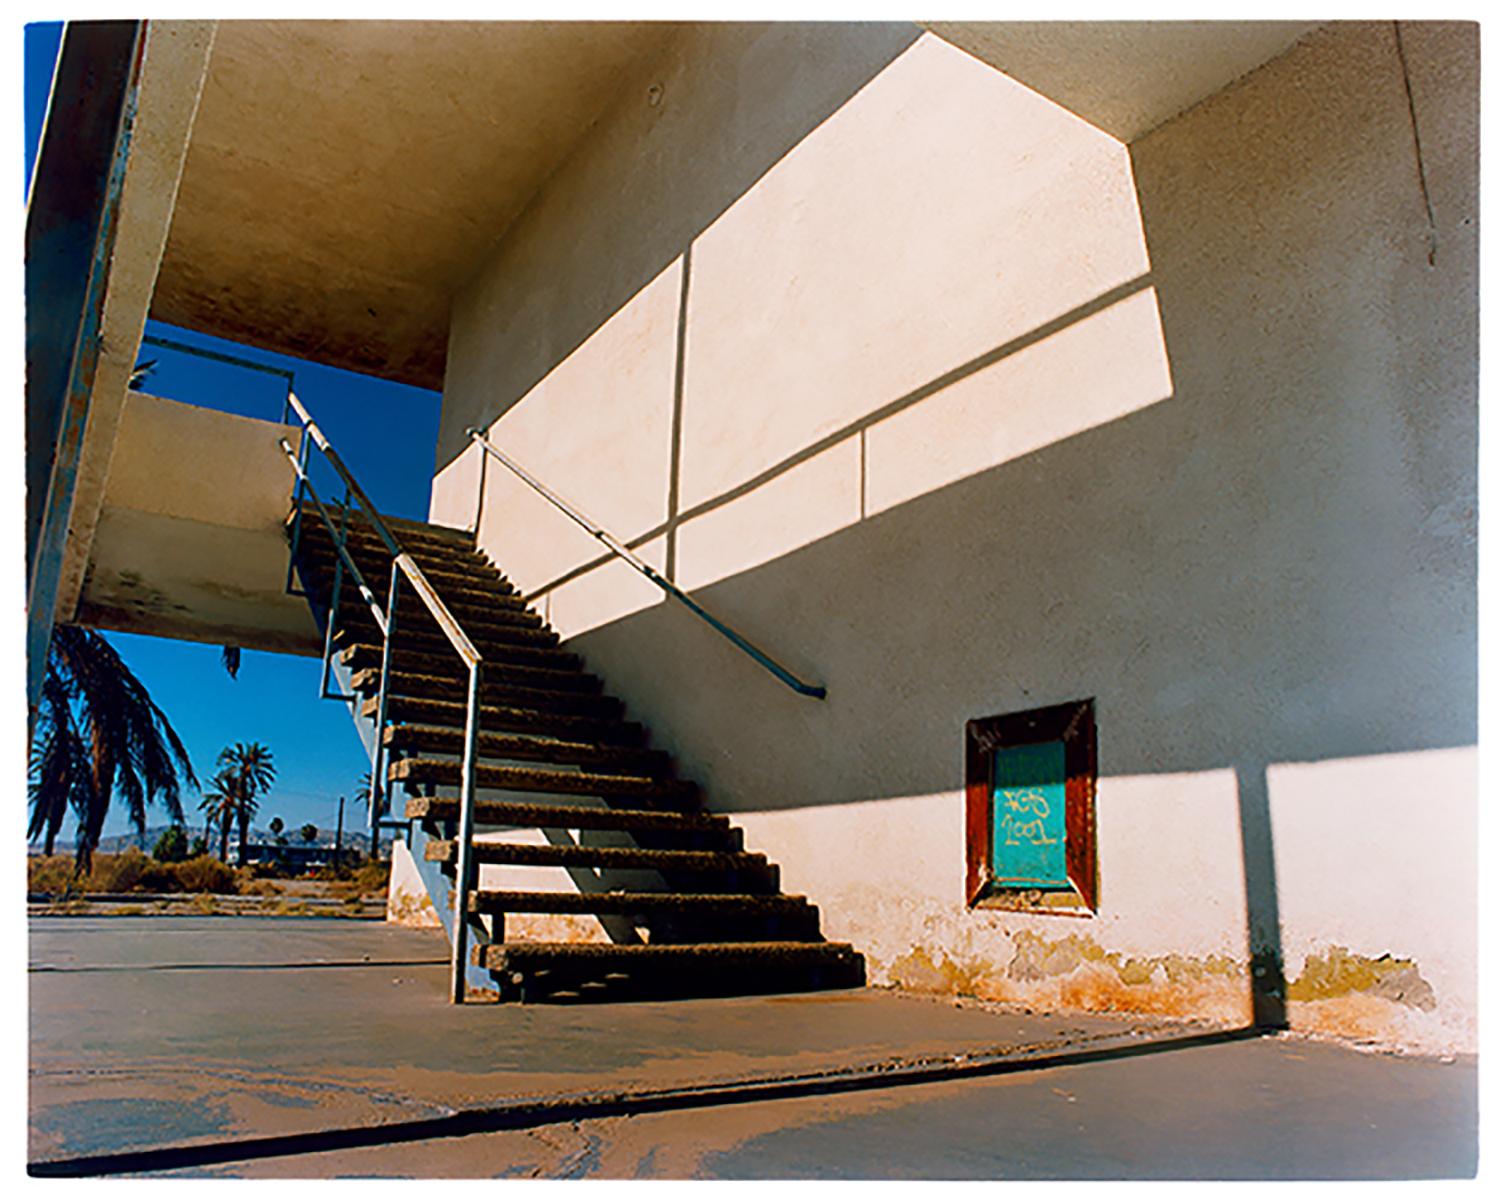 Richard Heeps Landscape Photograph - North Shore Motel Steps, Salton Sea, California - Architectural color photo